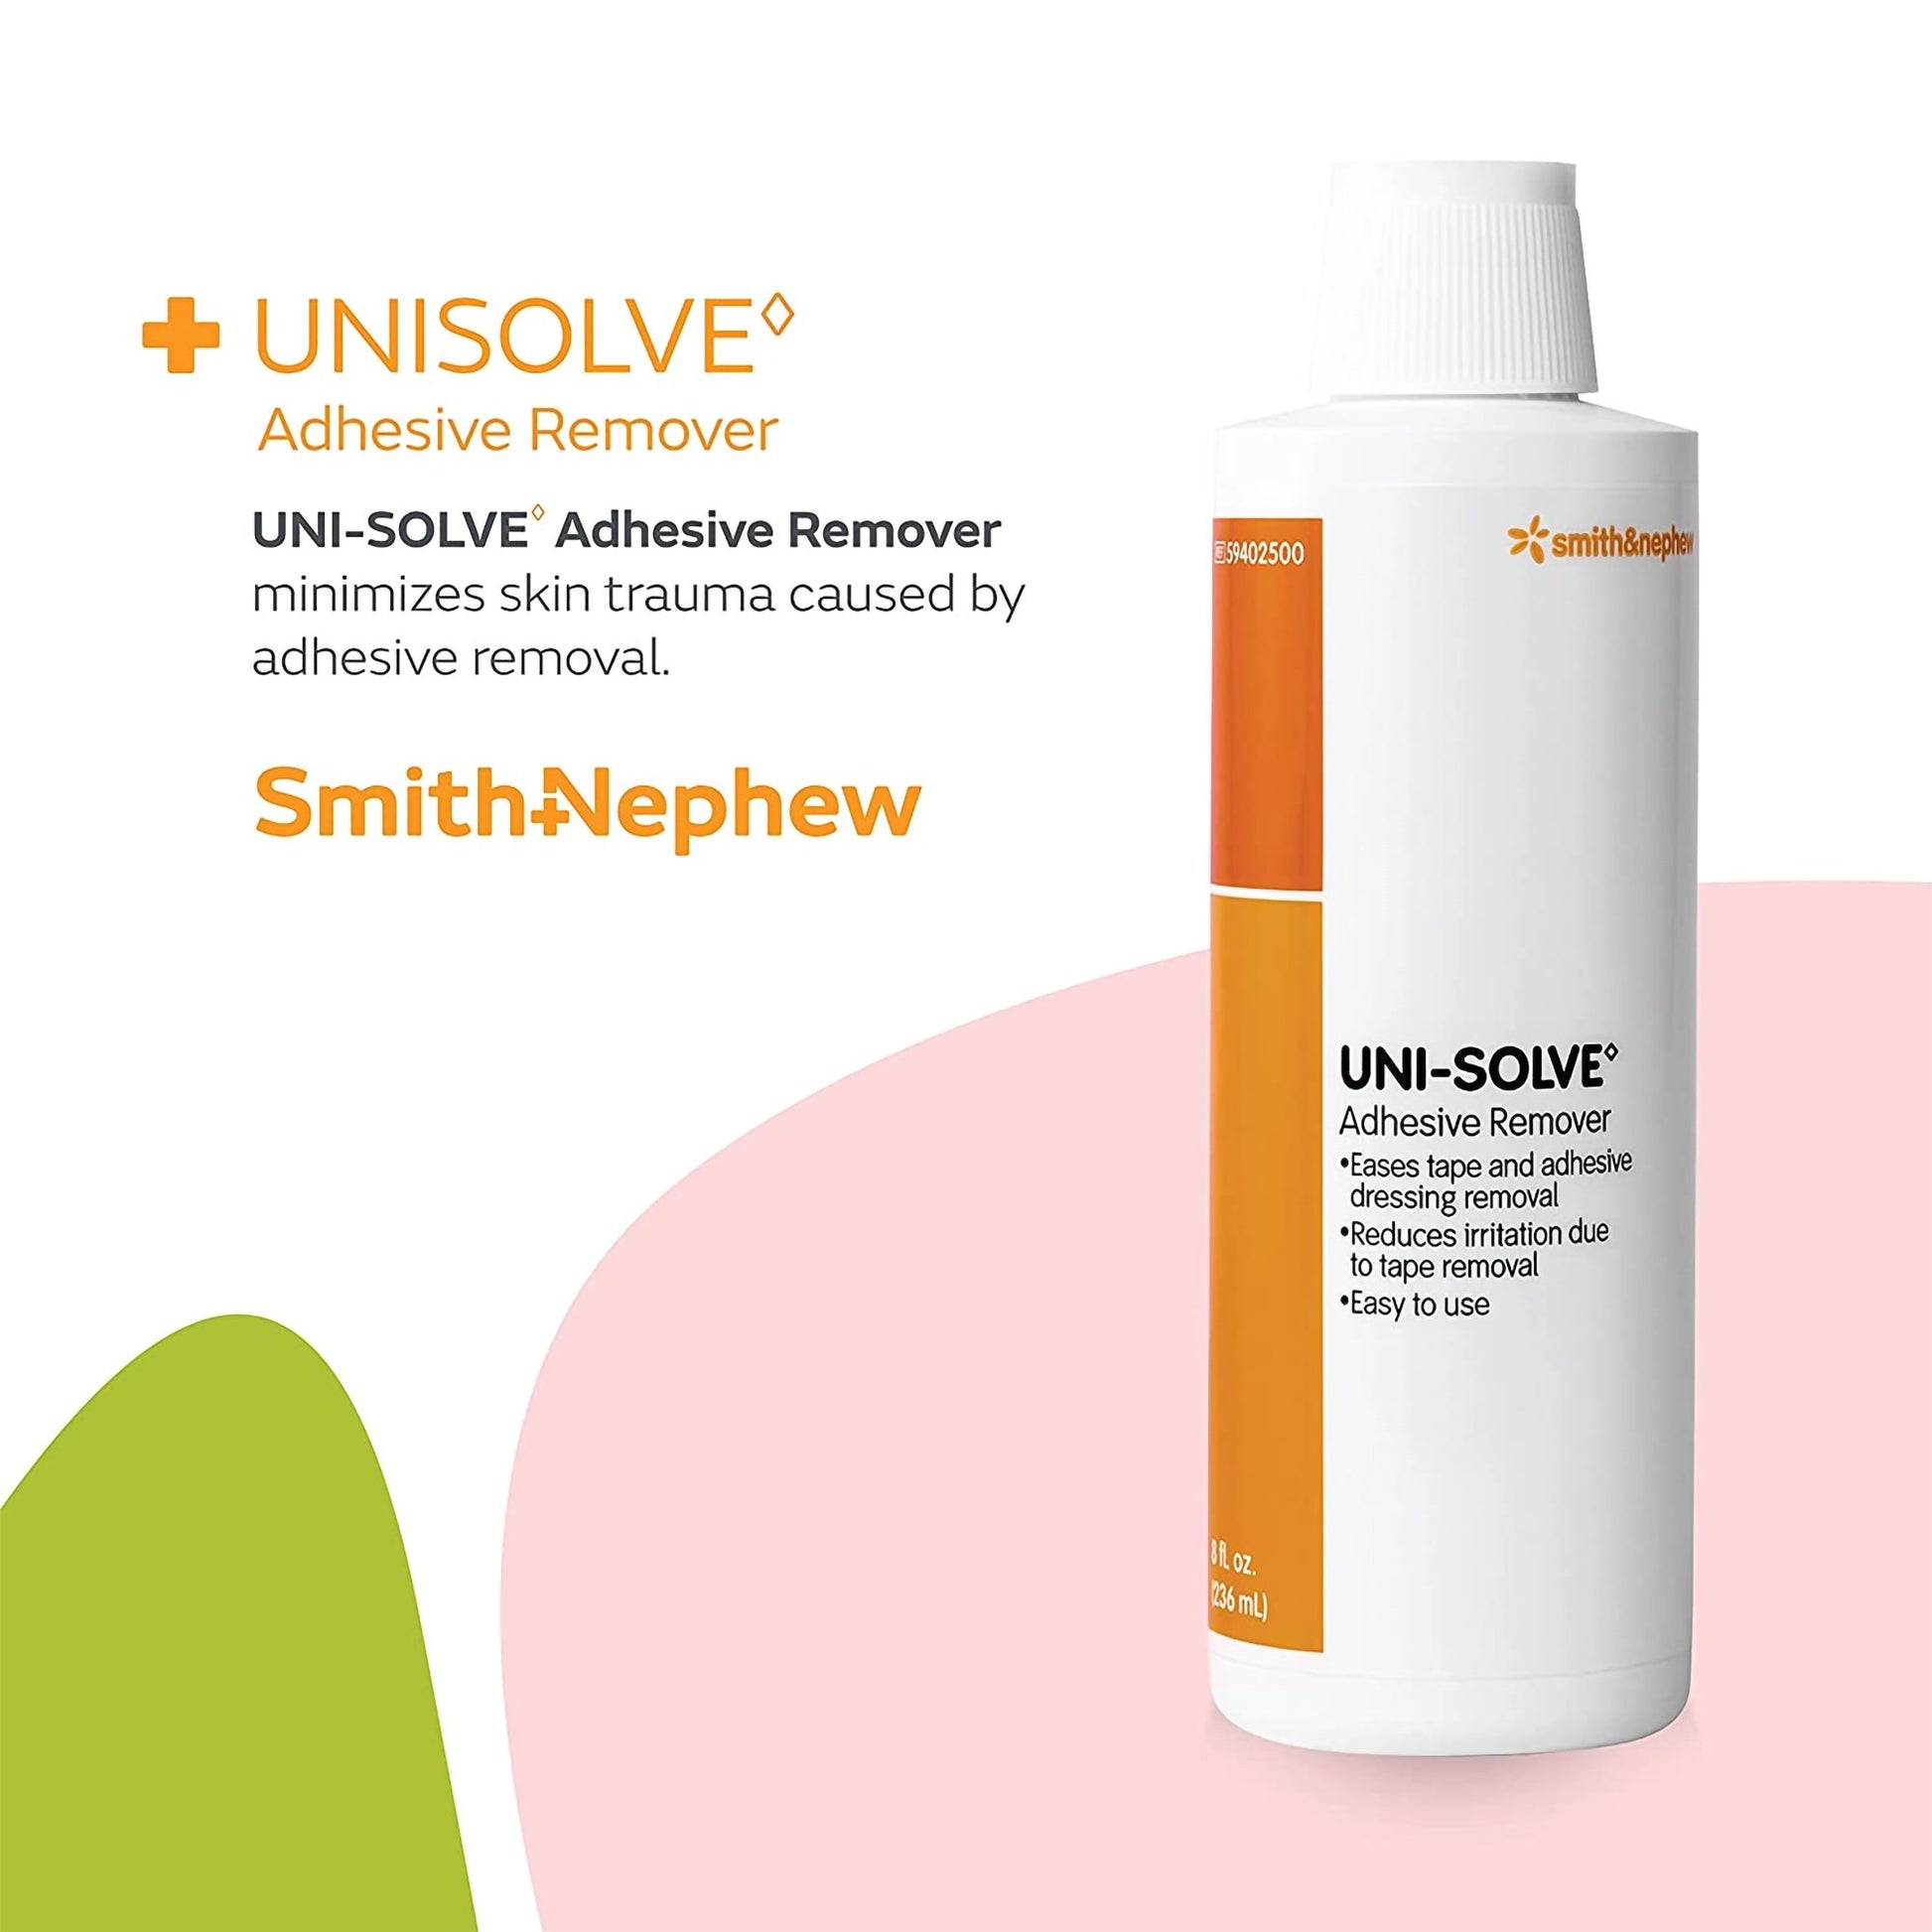 UNI-SOLVE Adhesive Remover Wipes